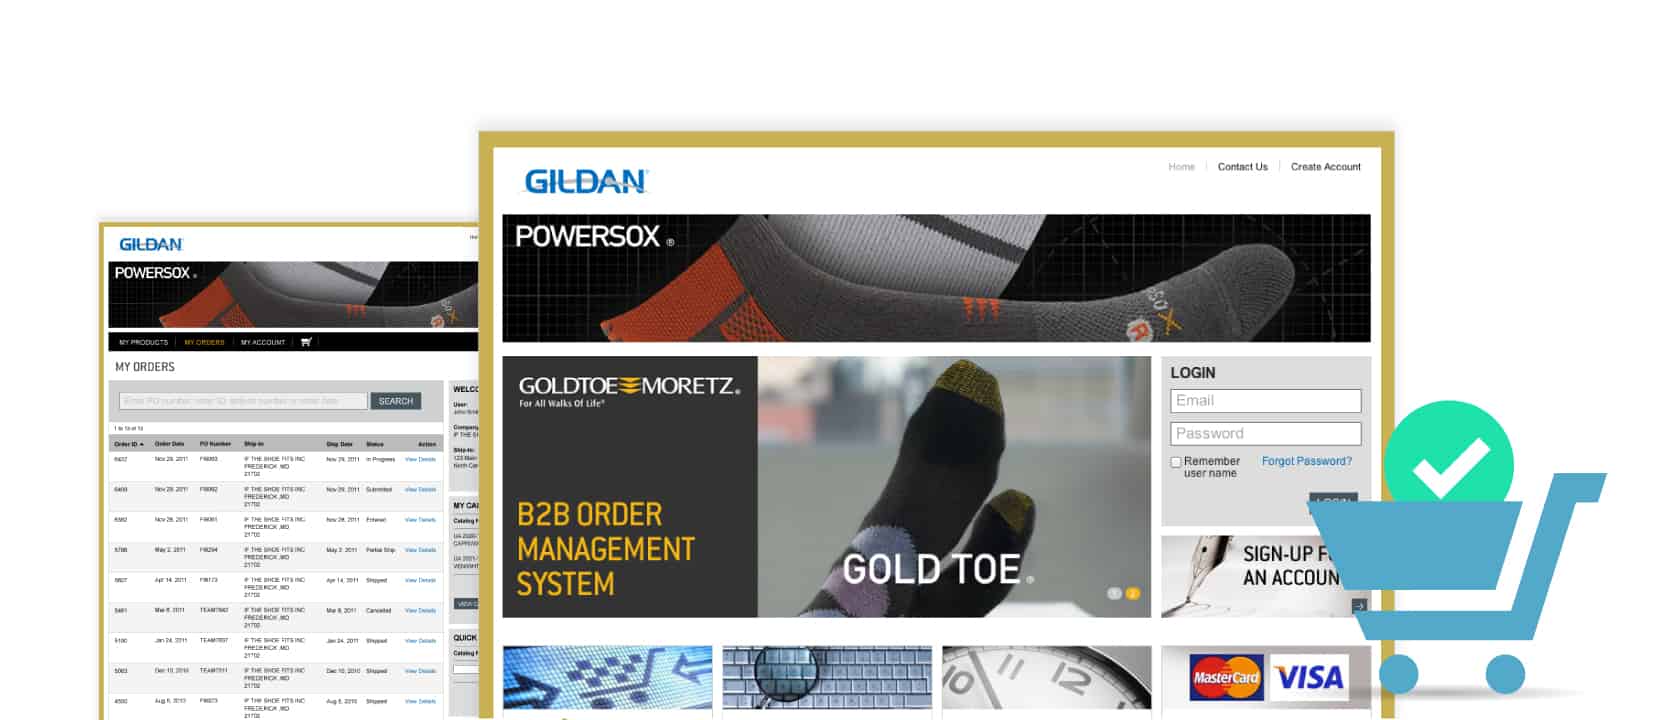 Screenshots of the Gildan homepage